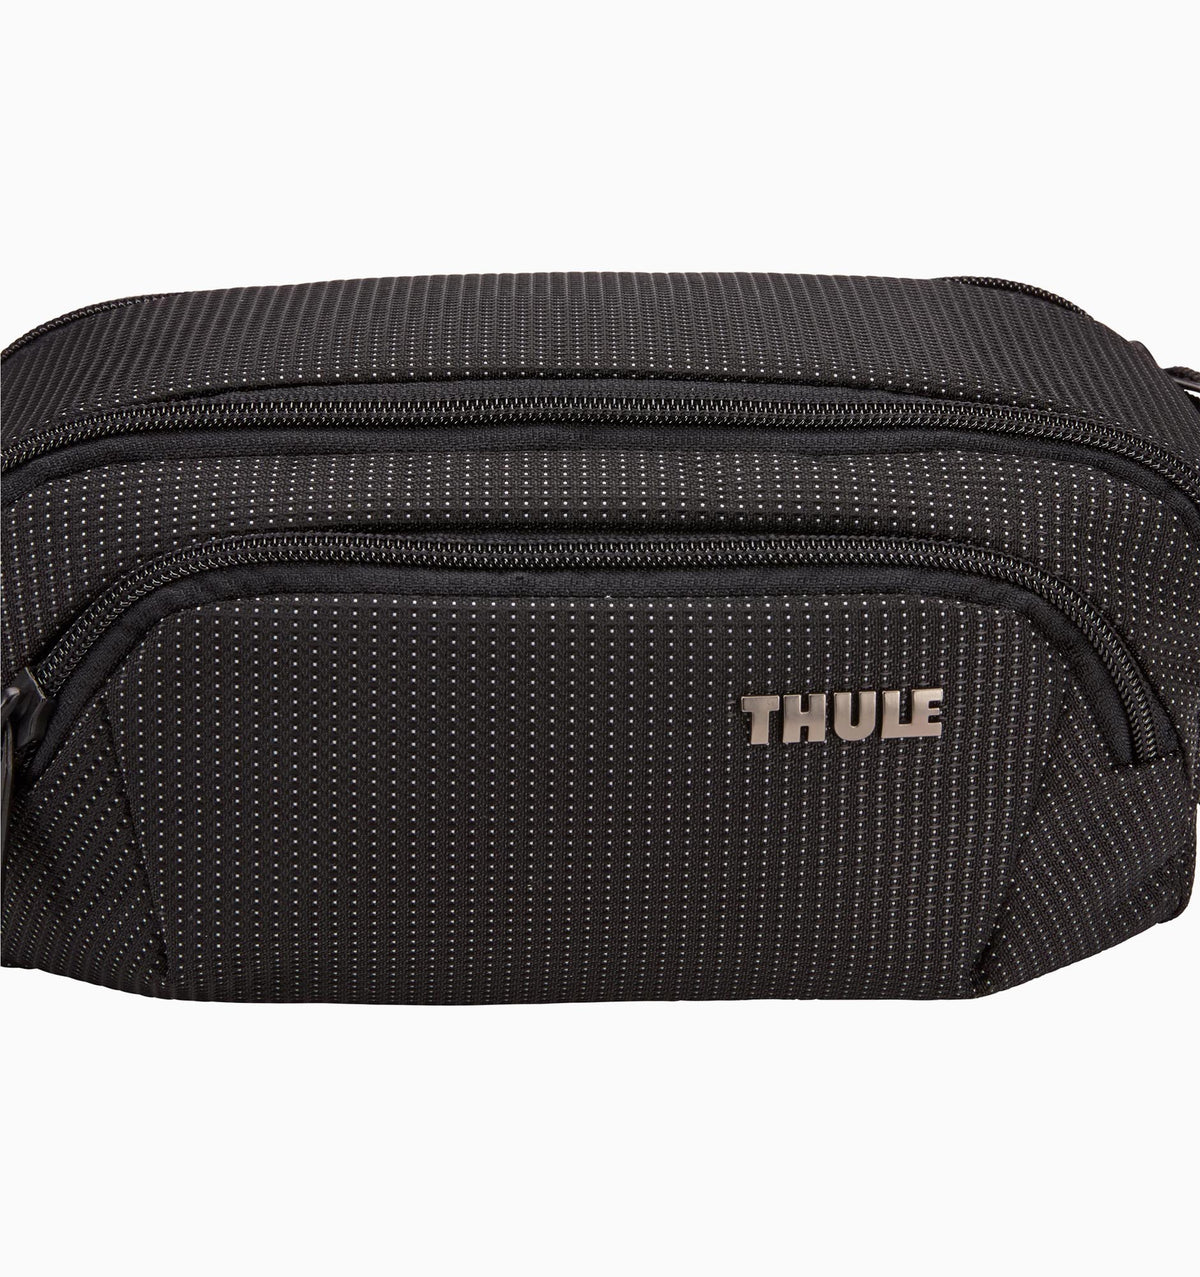 Thule - Crossover 2 - Toiletry Bag - Black